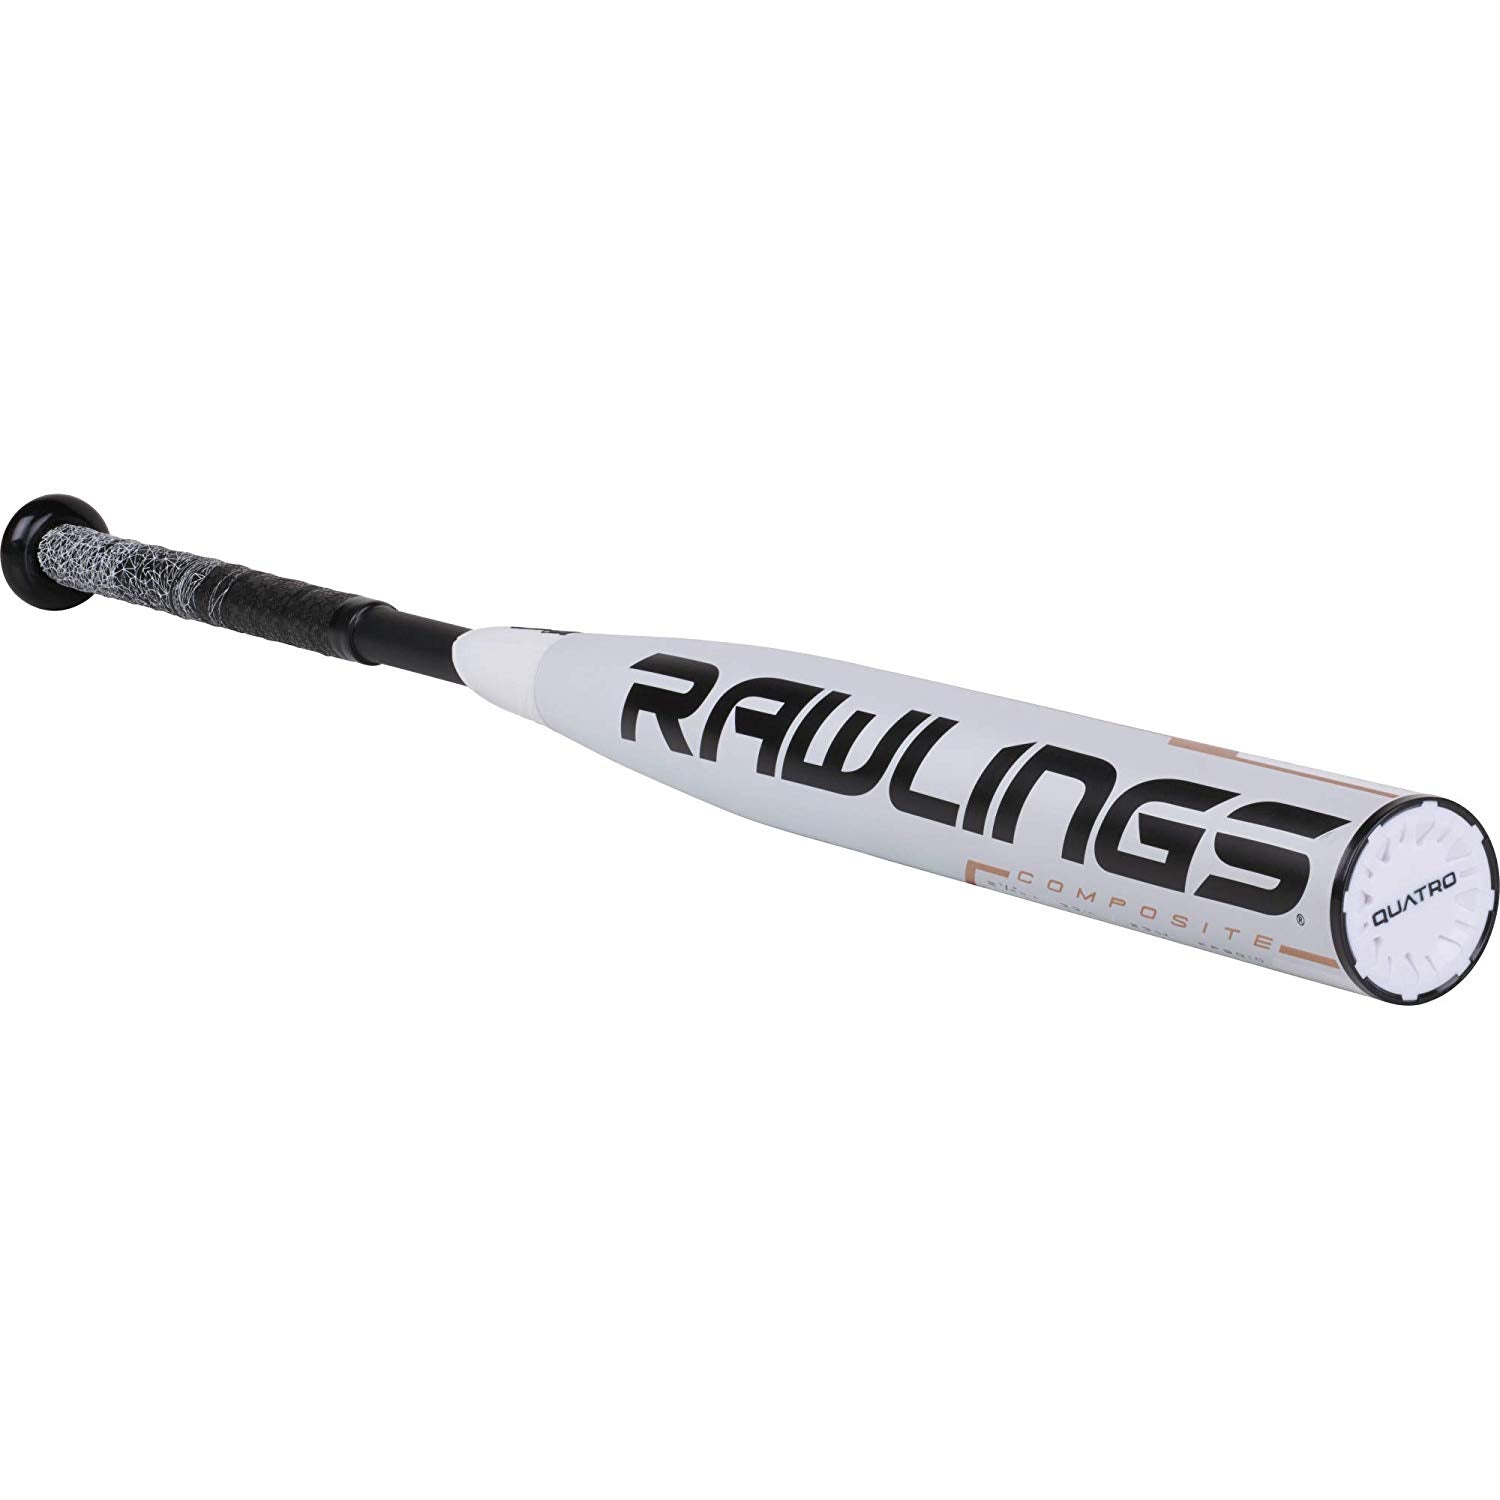 New Rawlings FP9Q10 Quatro Fastpitch Softball Bat -10 Comp